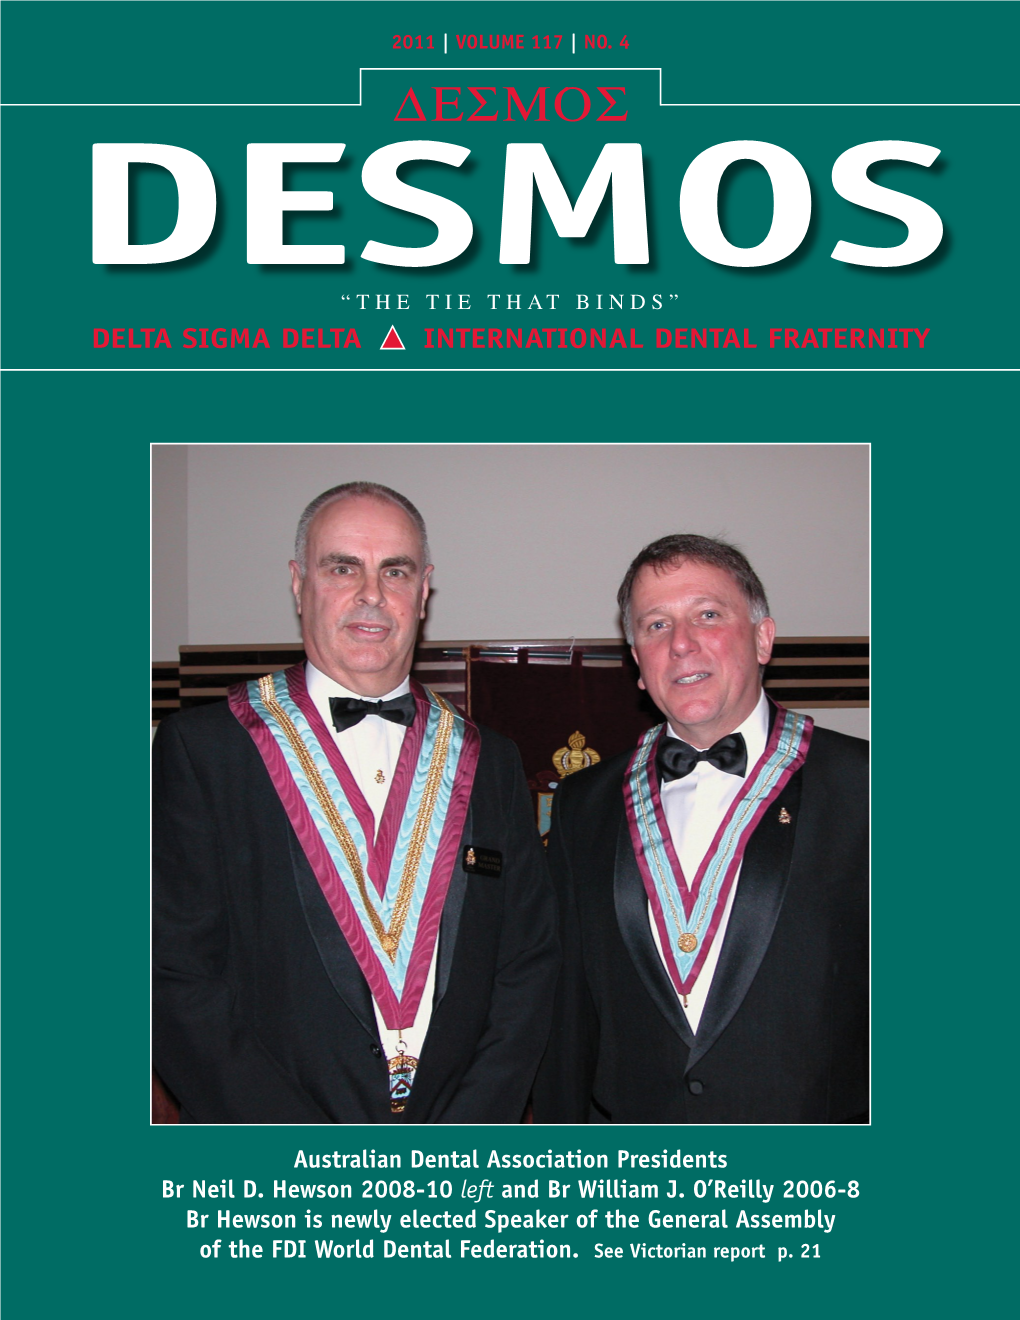 DESMOS “The Tie Tha T B I N D S ” DELTA SIGMA DELTA S INTERNATIONAL DENTAL FRATERNITY